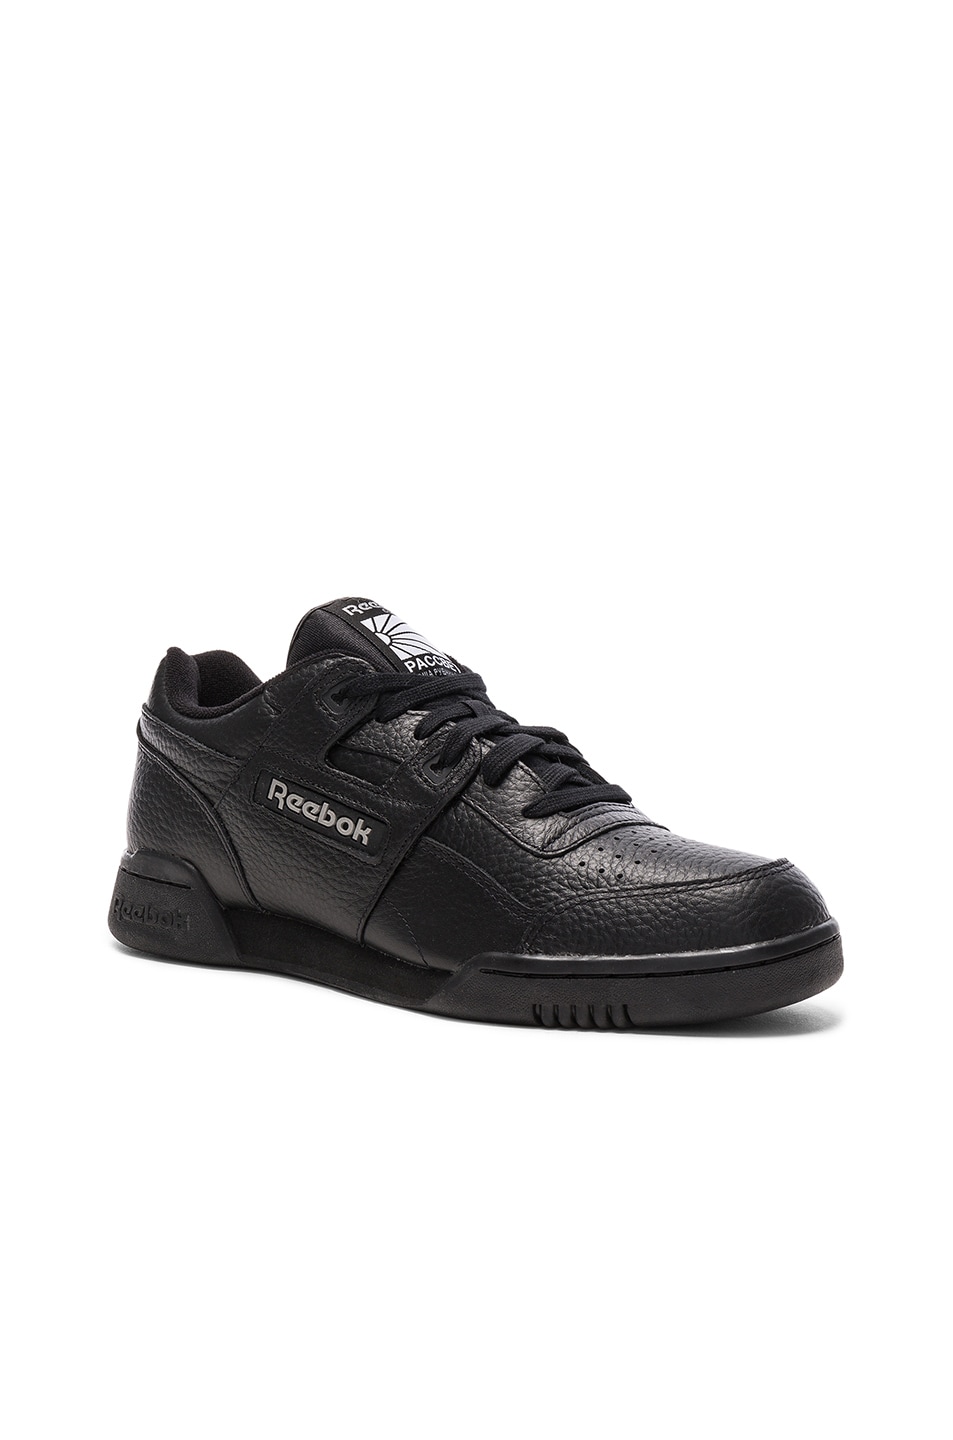 Image 1 of Gosha Rubchinskiy x Reebok Leather Classic Low Sneakers in Black